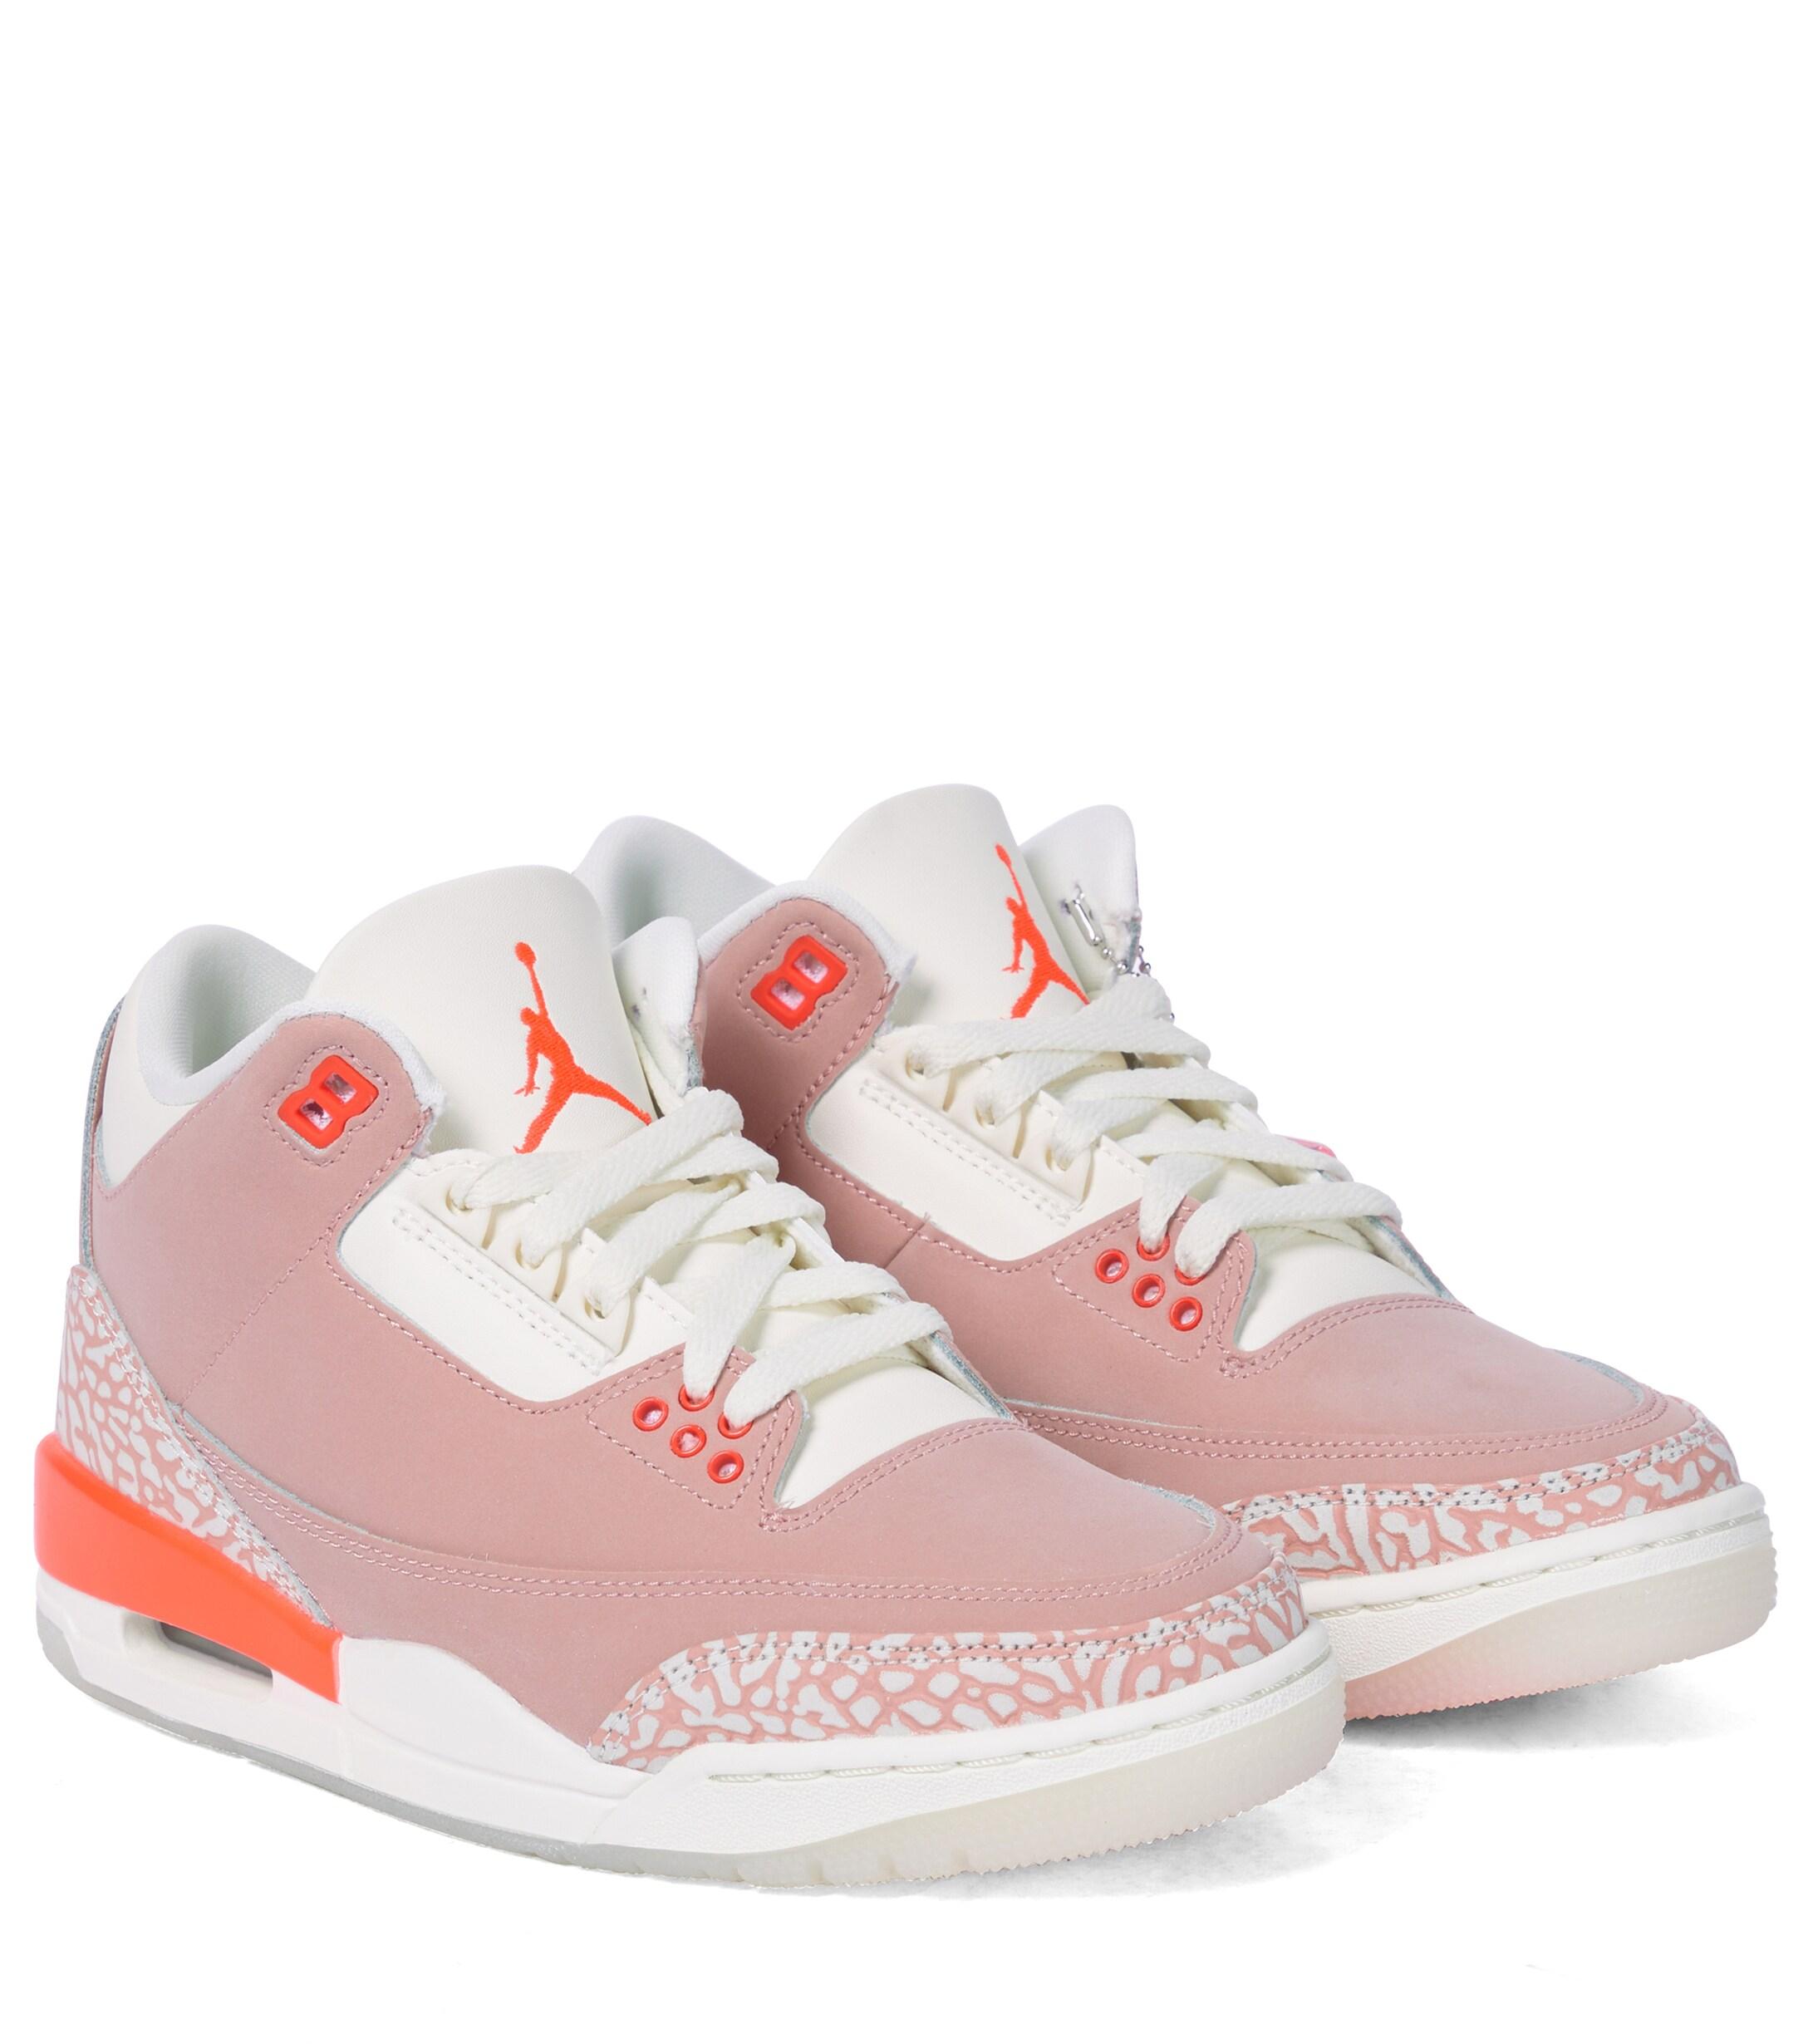 Nike Air Jordan 3 Retro Leather Sneakers in Pink | Lyst